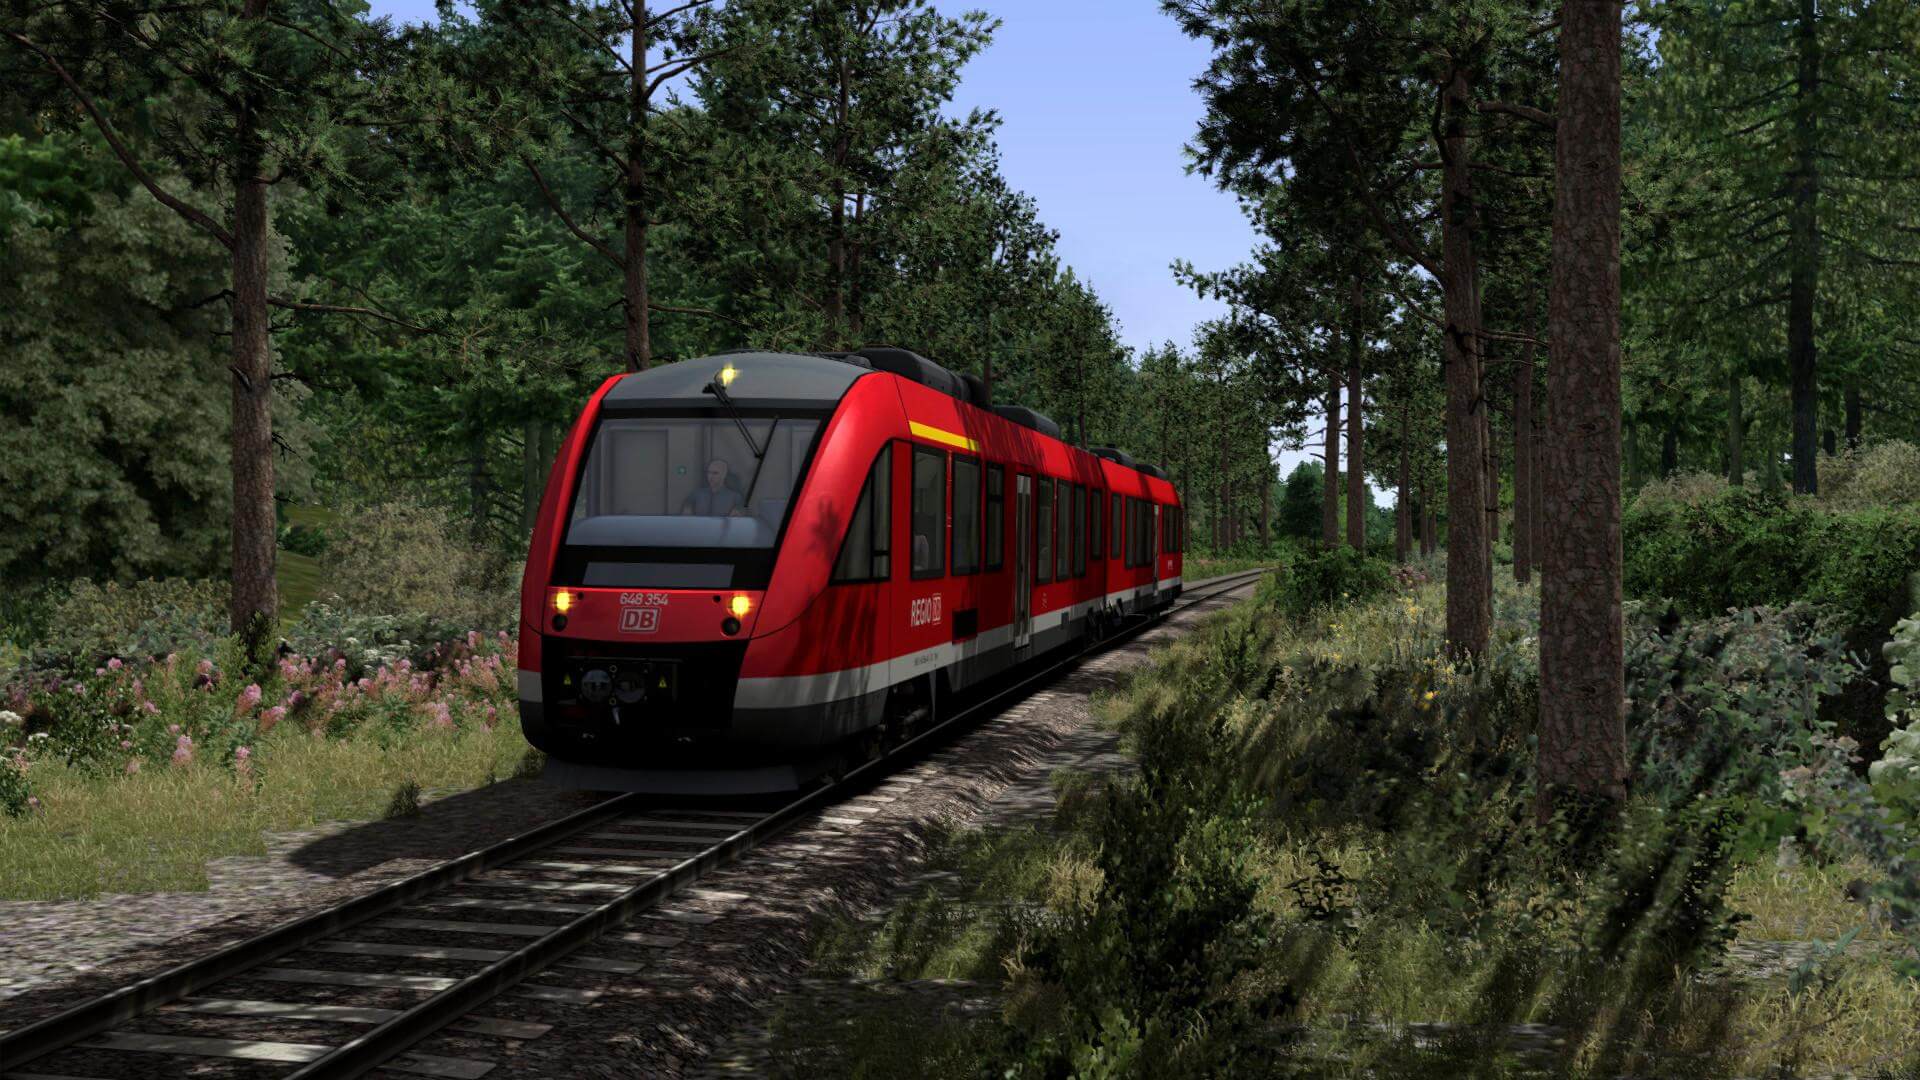 train simulator 2021 logo